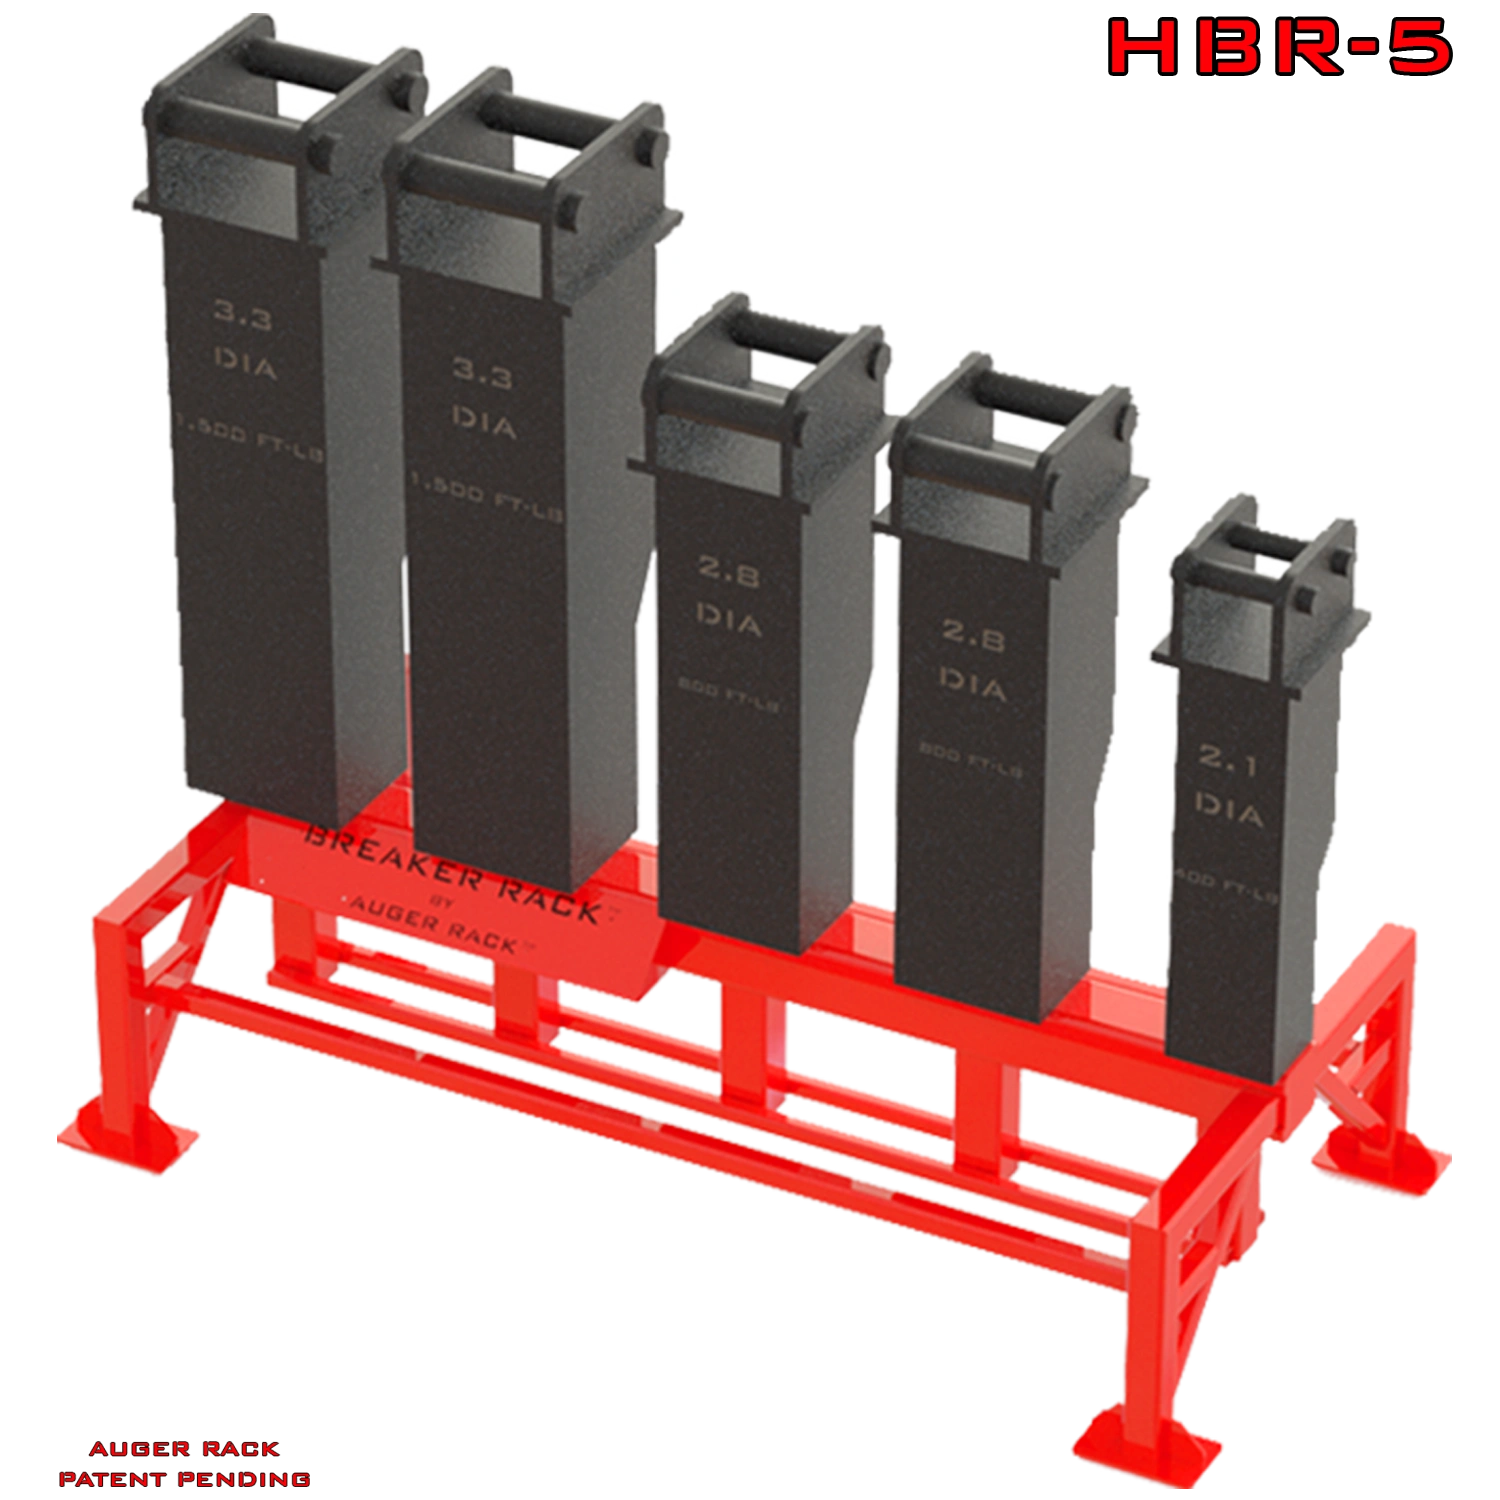 HBR-5 Hydraulic Breaker Storage Rack